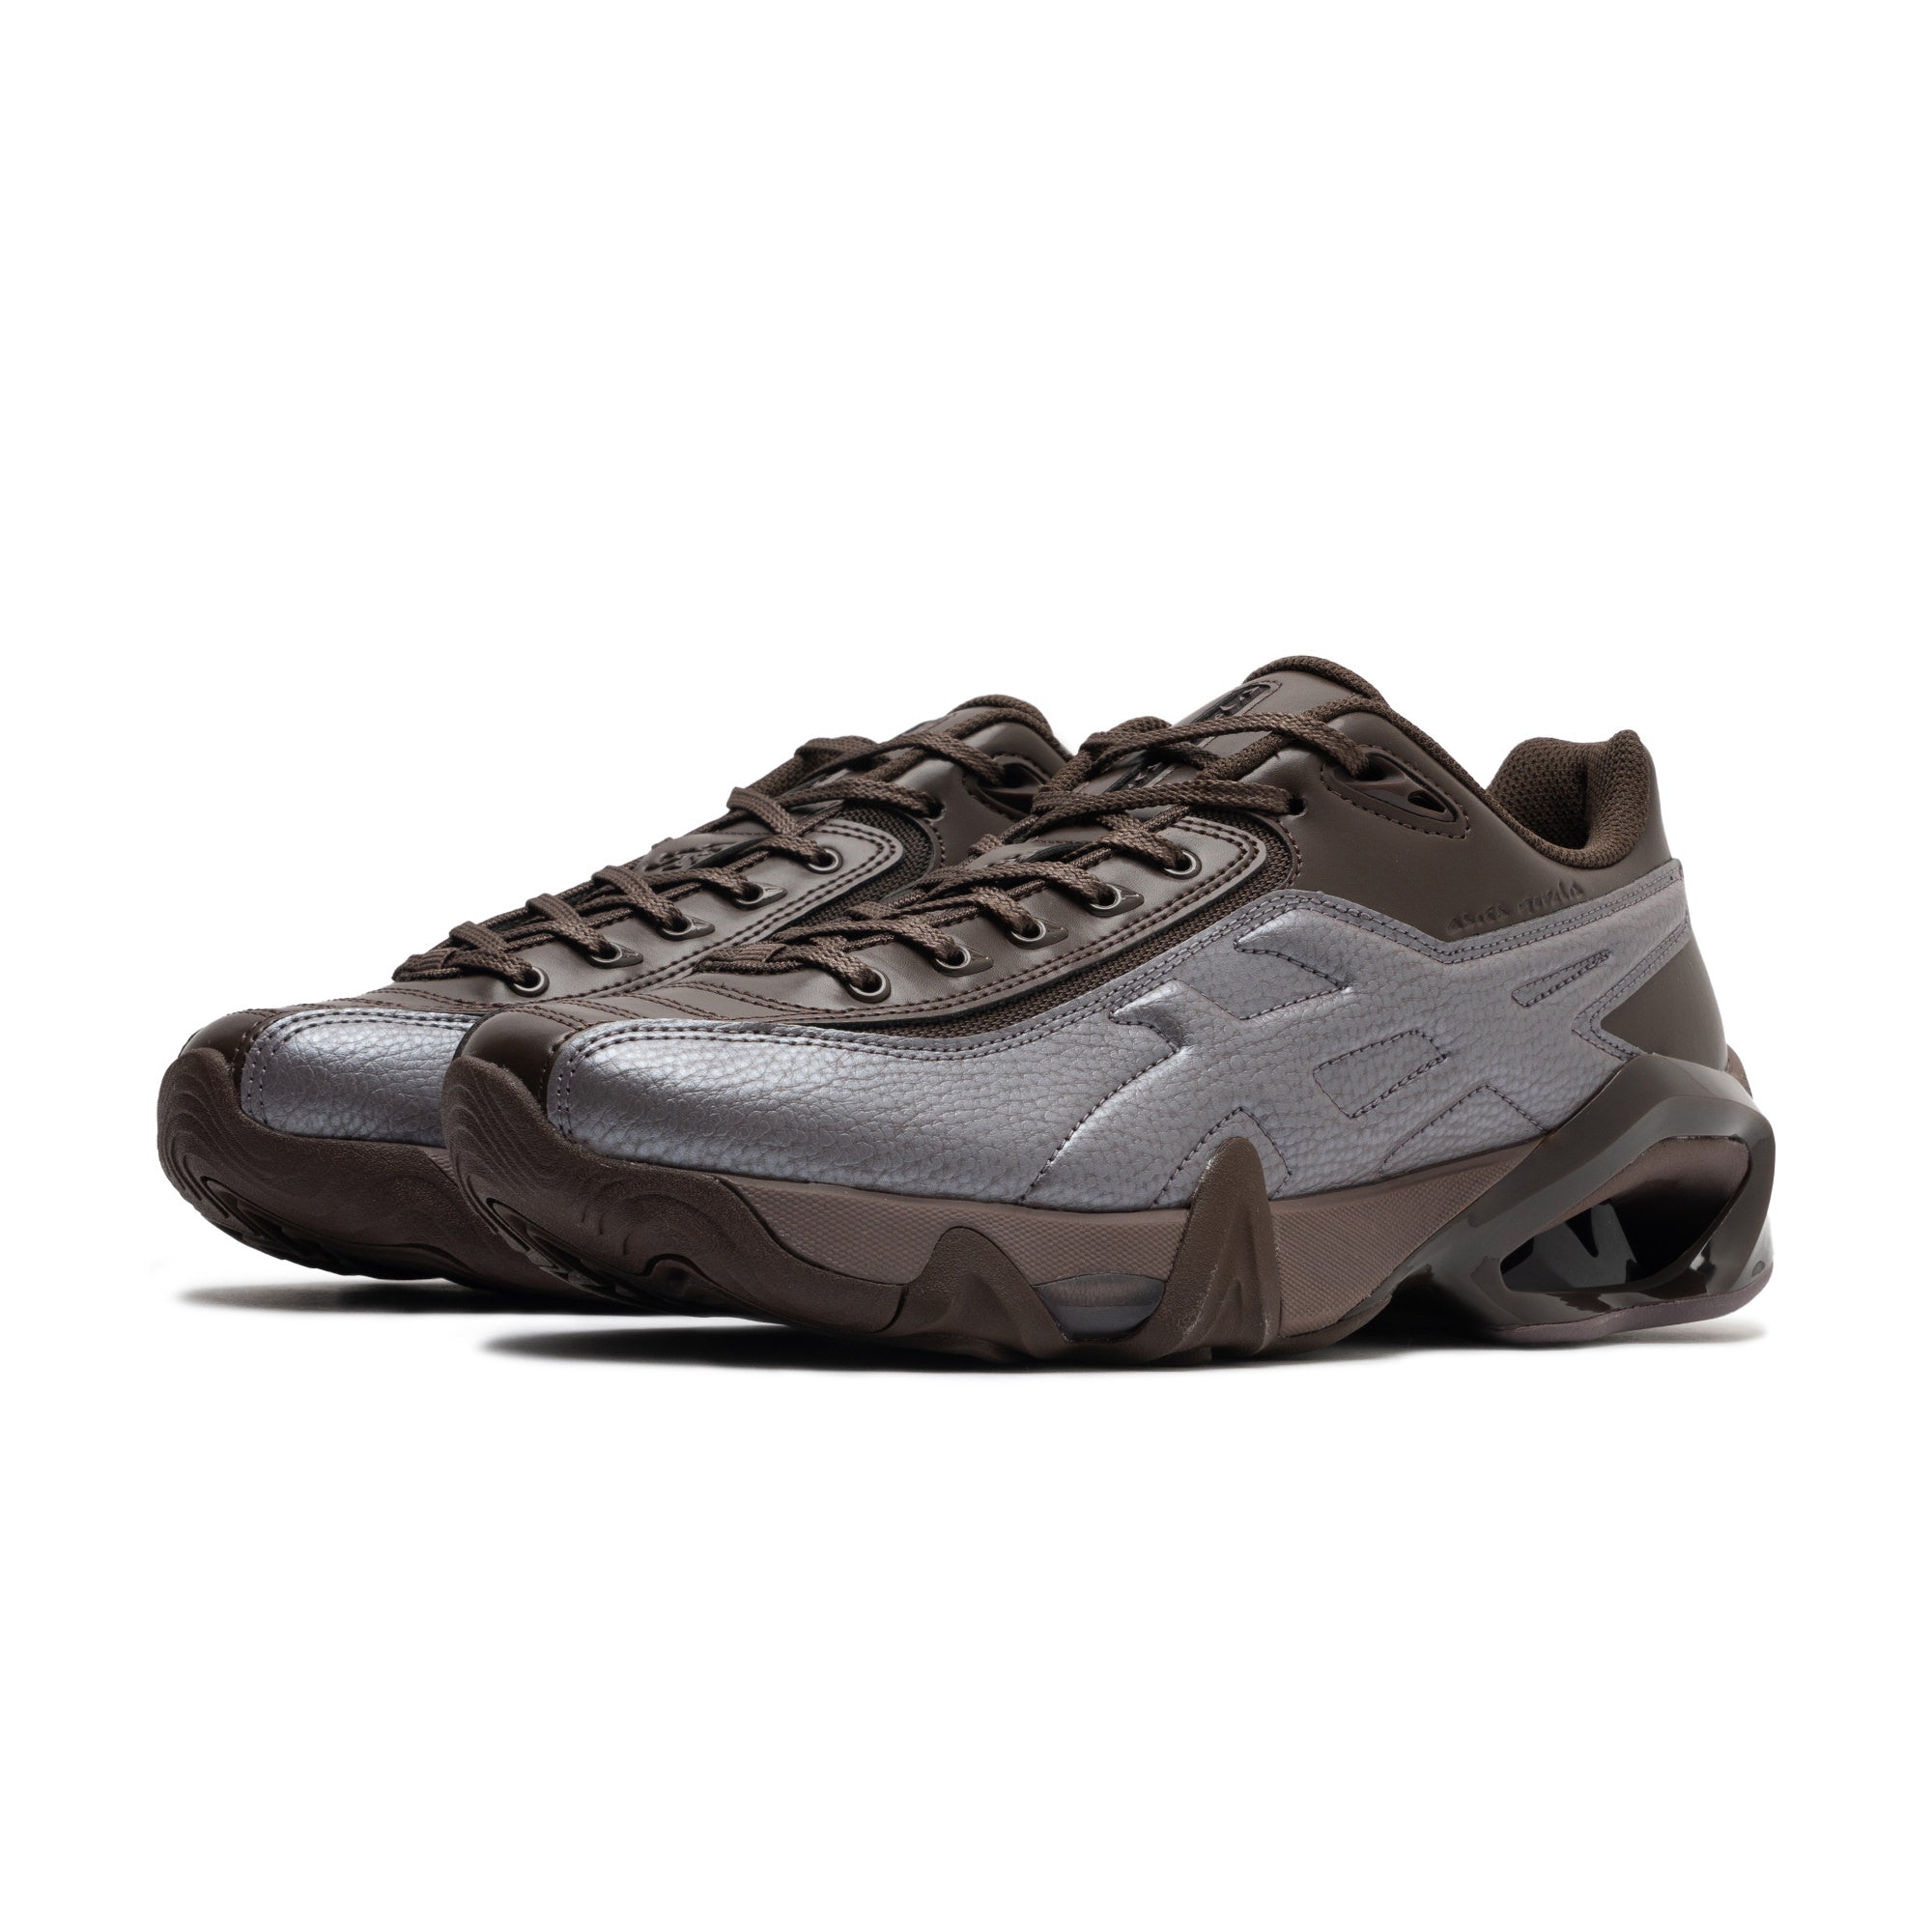 Asics gt-1000 6 mens running shoes black-black-silver t7a4n-9090